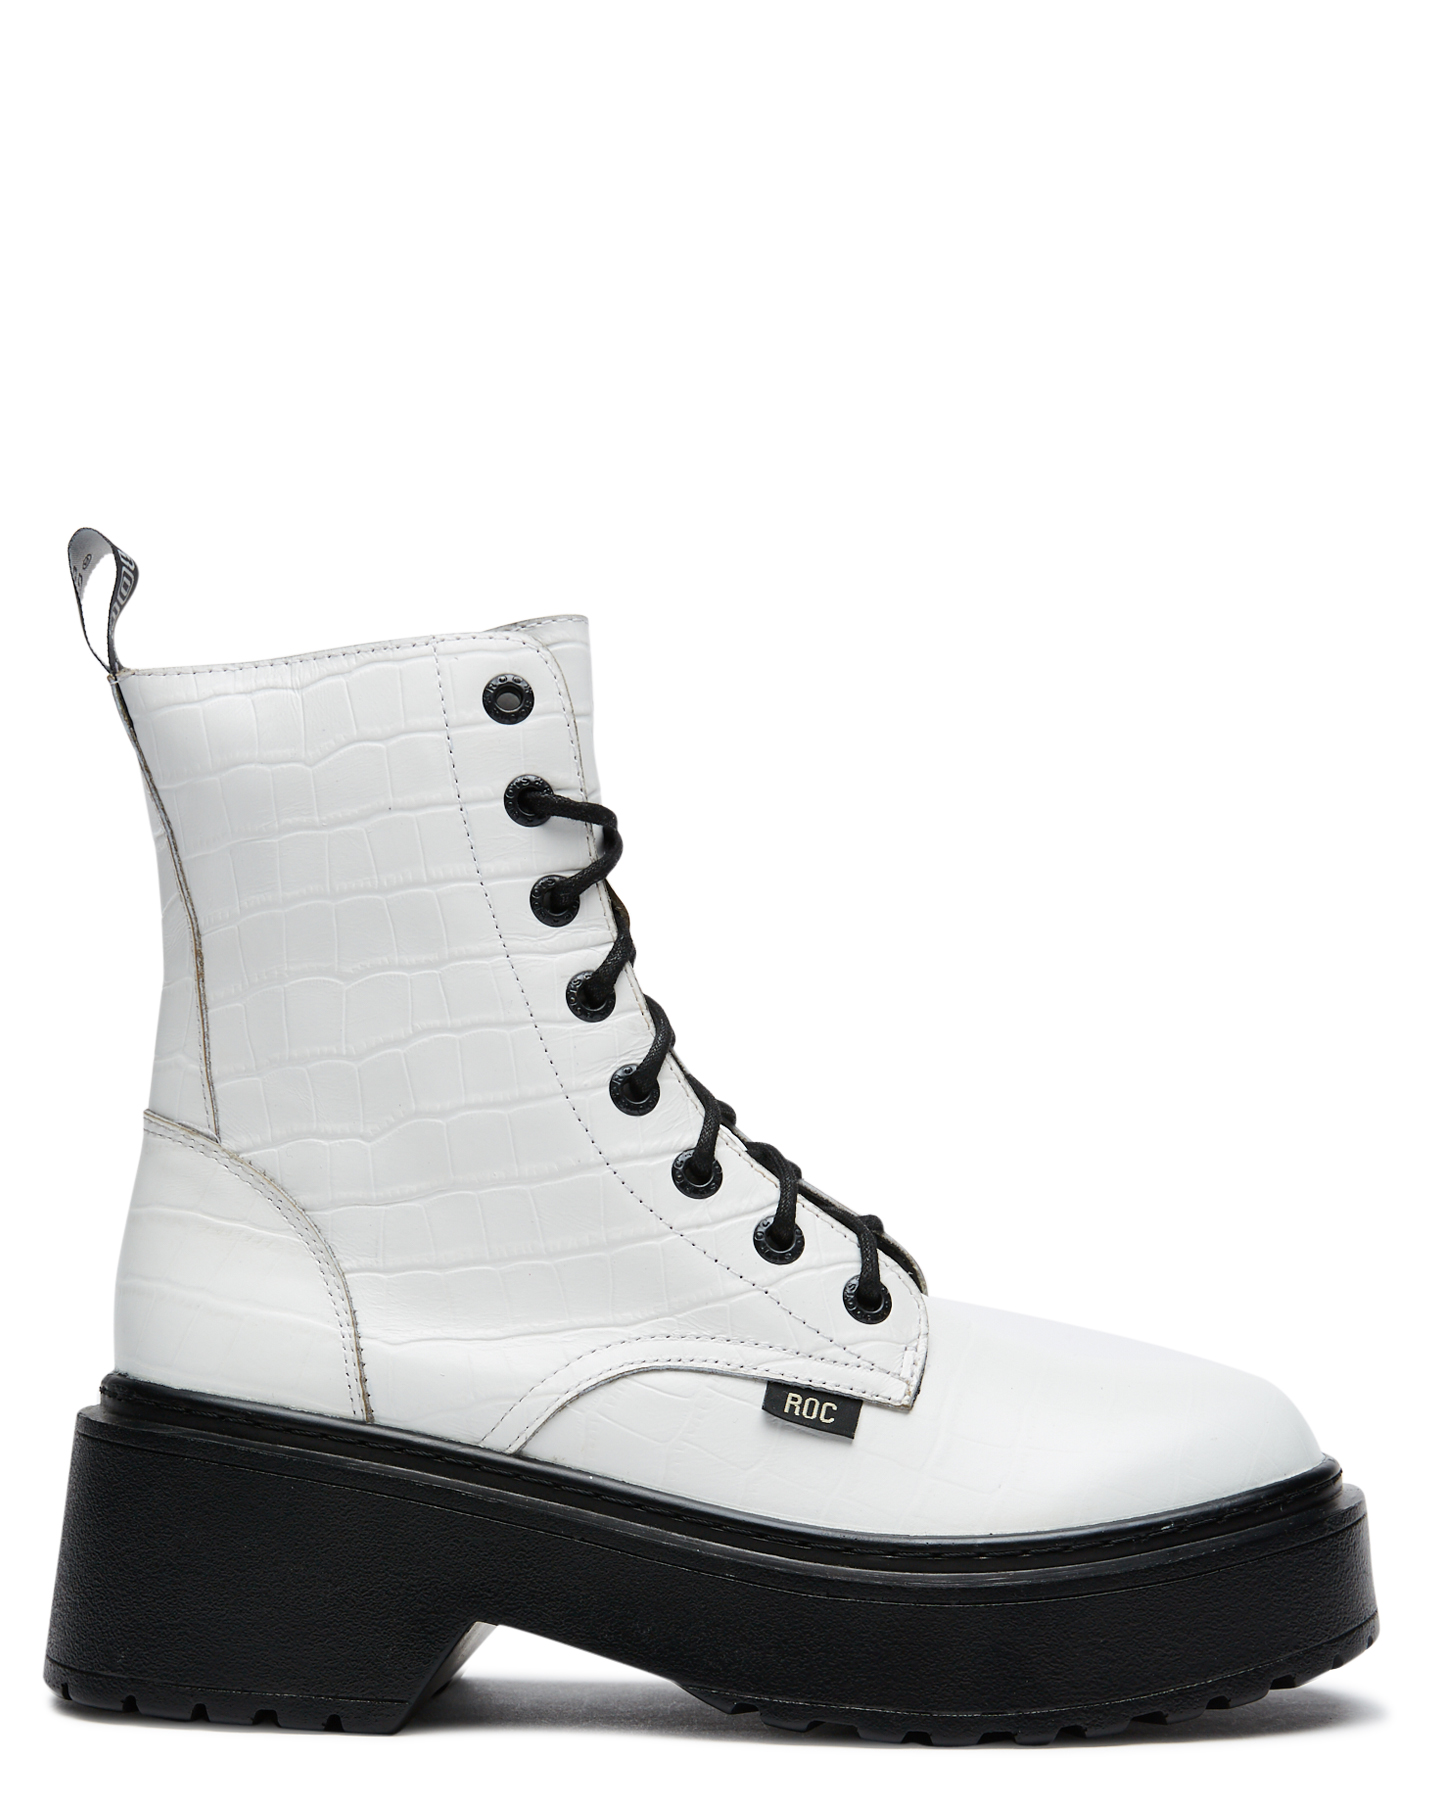 croc white boots